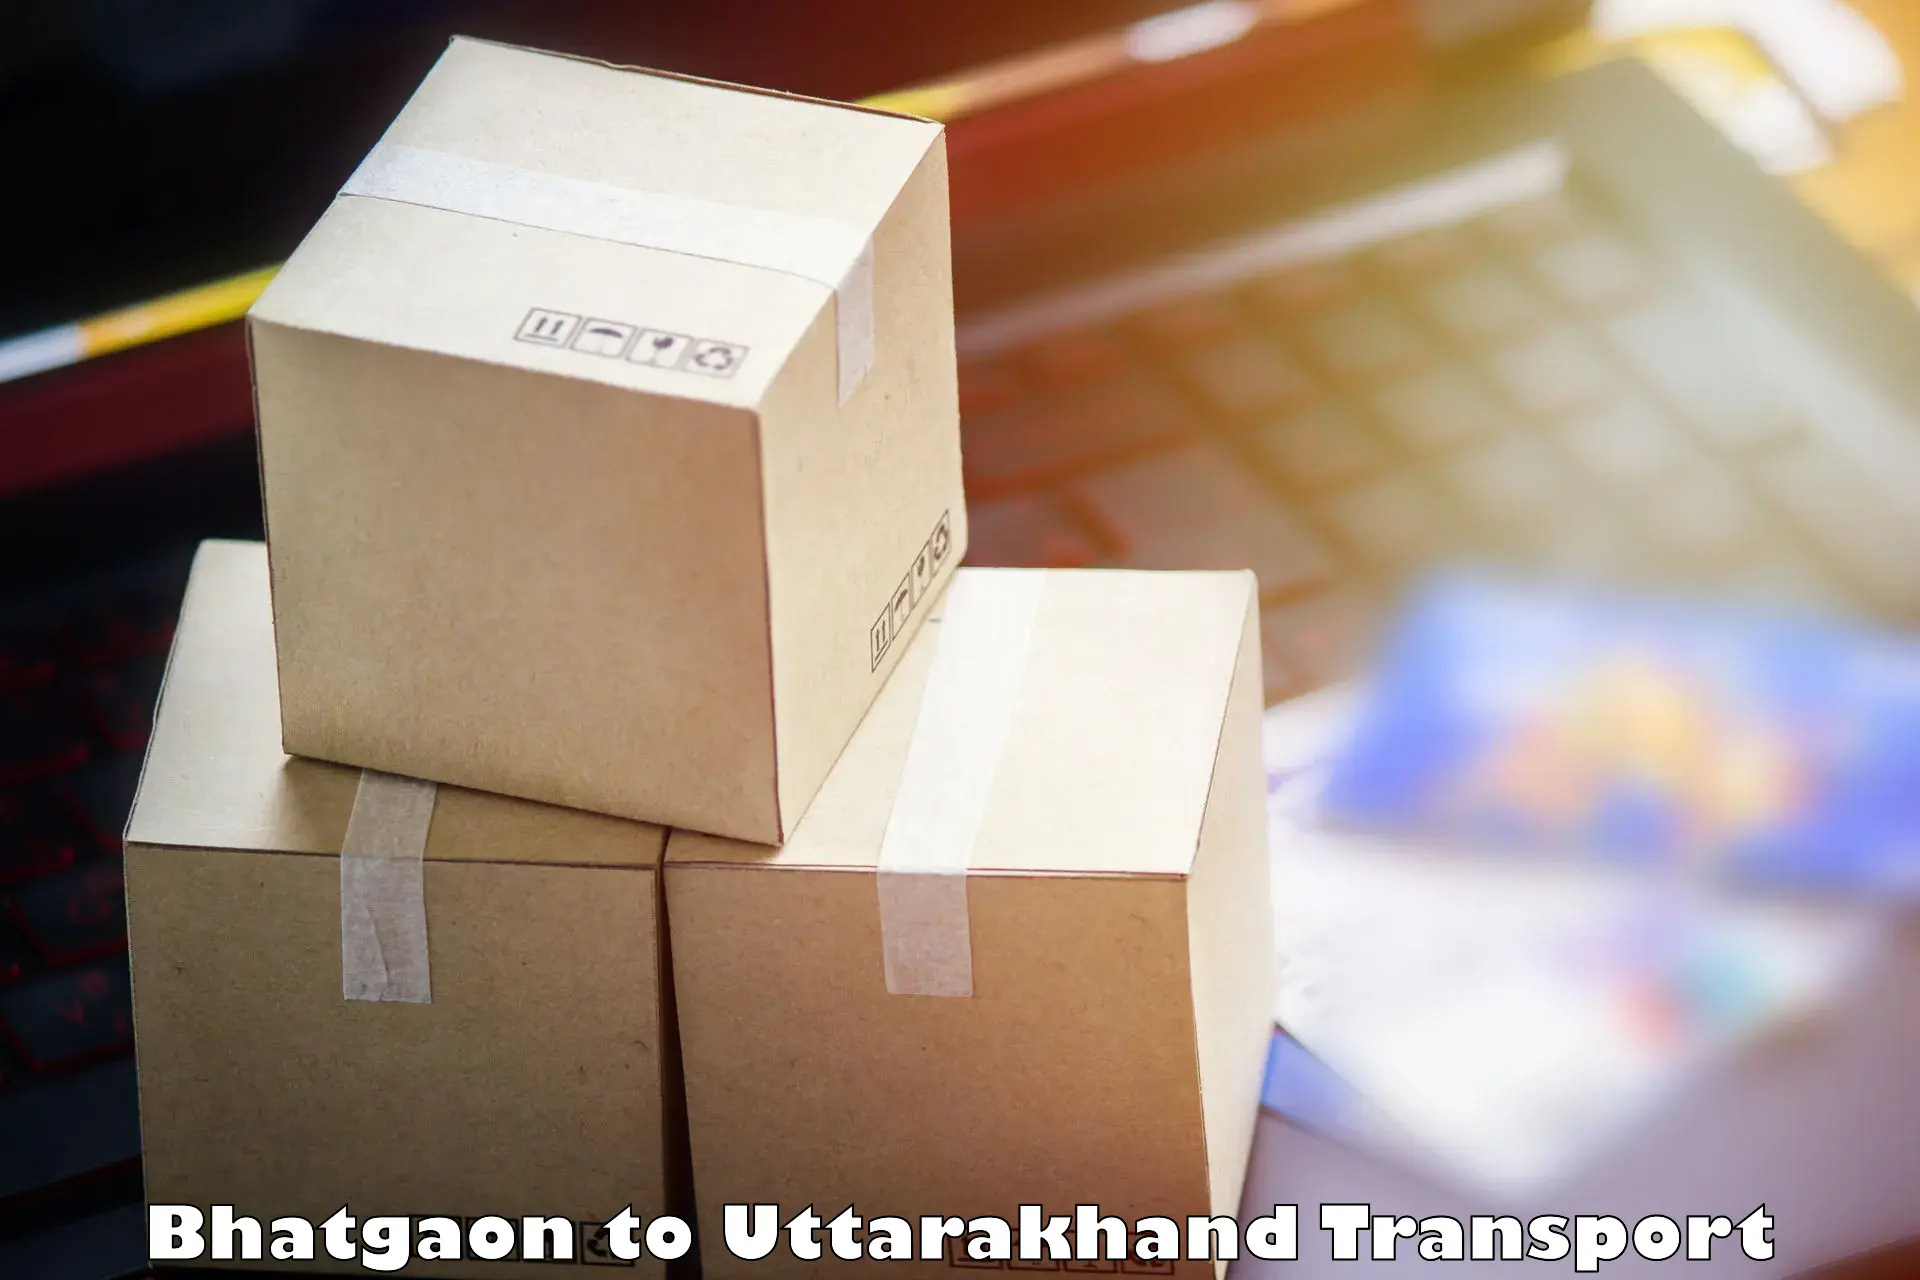 Sending bike to another city Bhatgaon to Uttarakhand